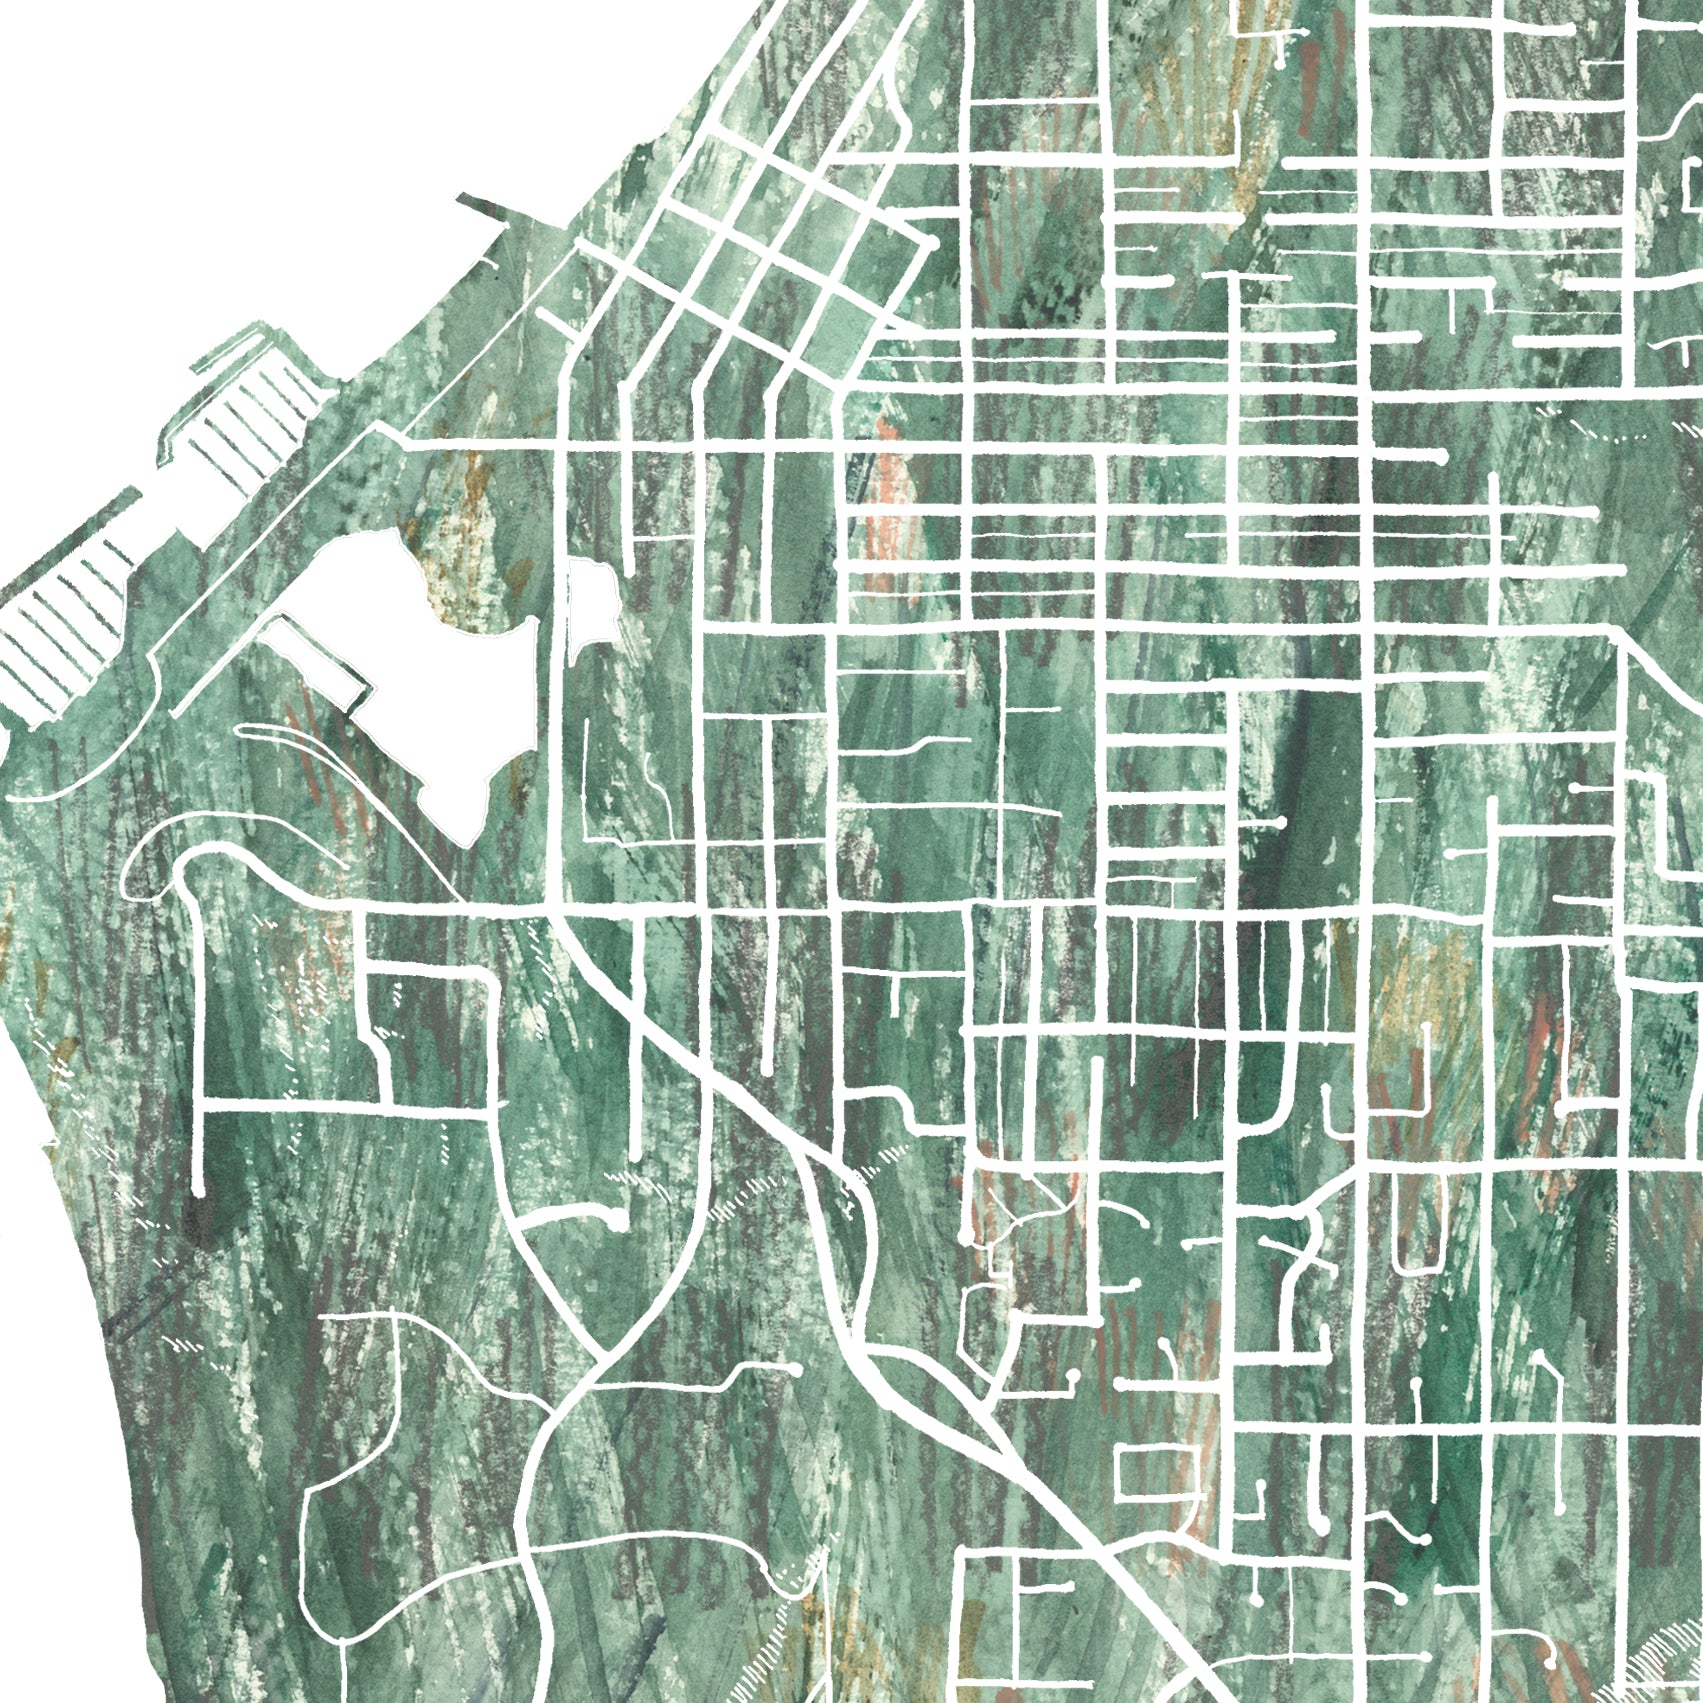 EDMONDS Washington Urban Fabrics City Map: PRINT